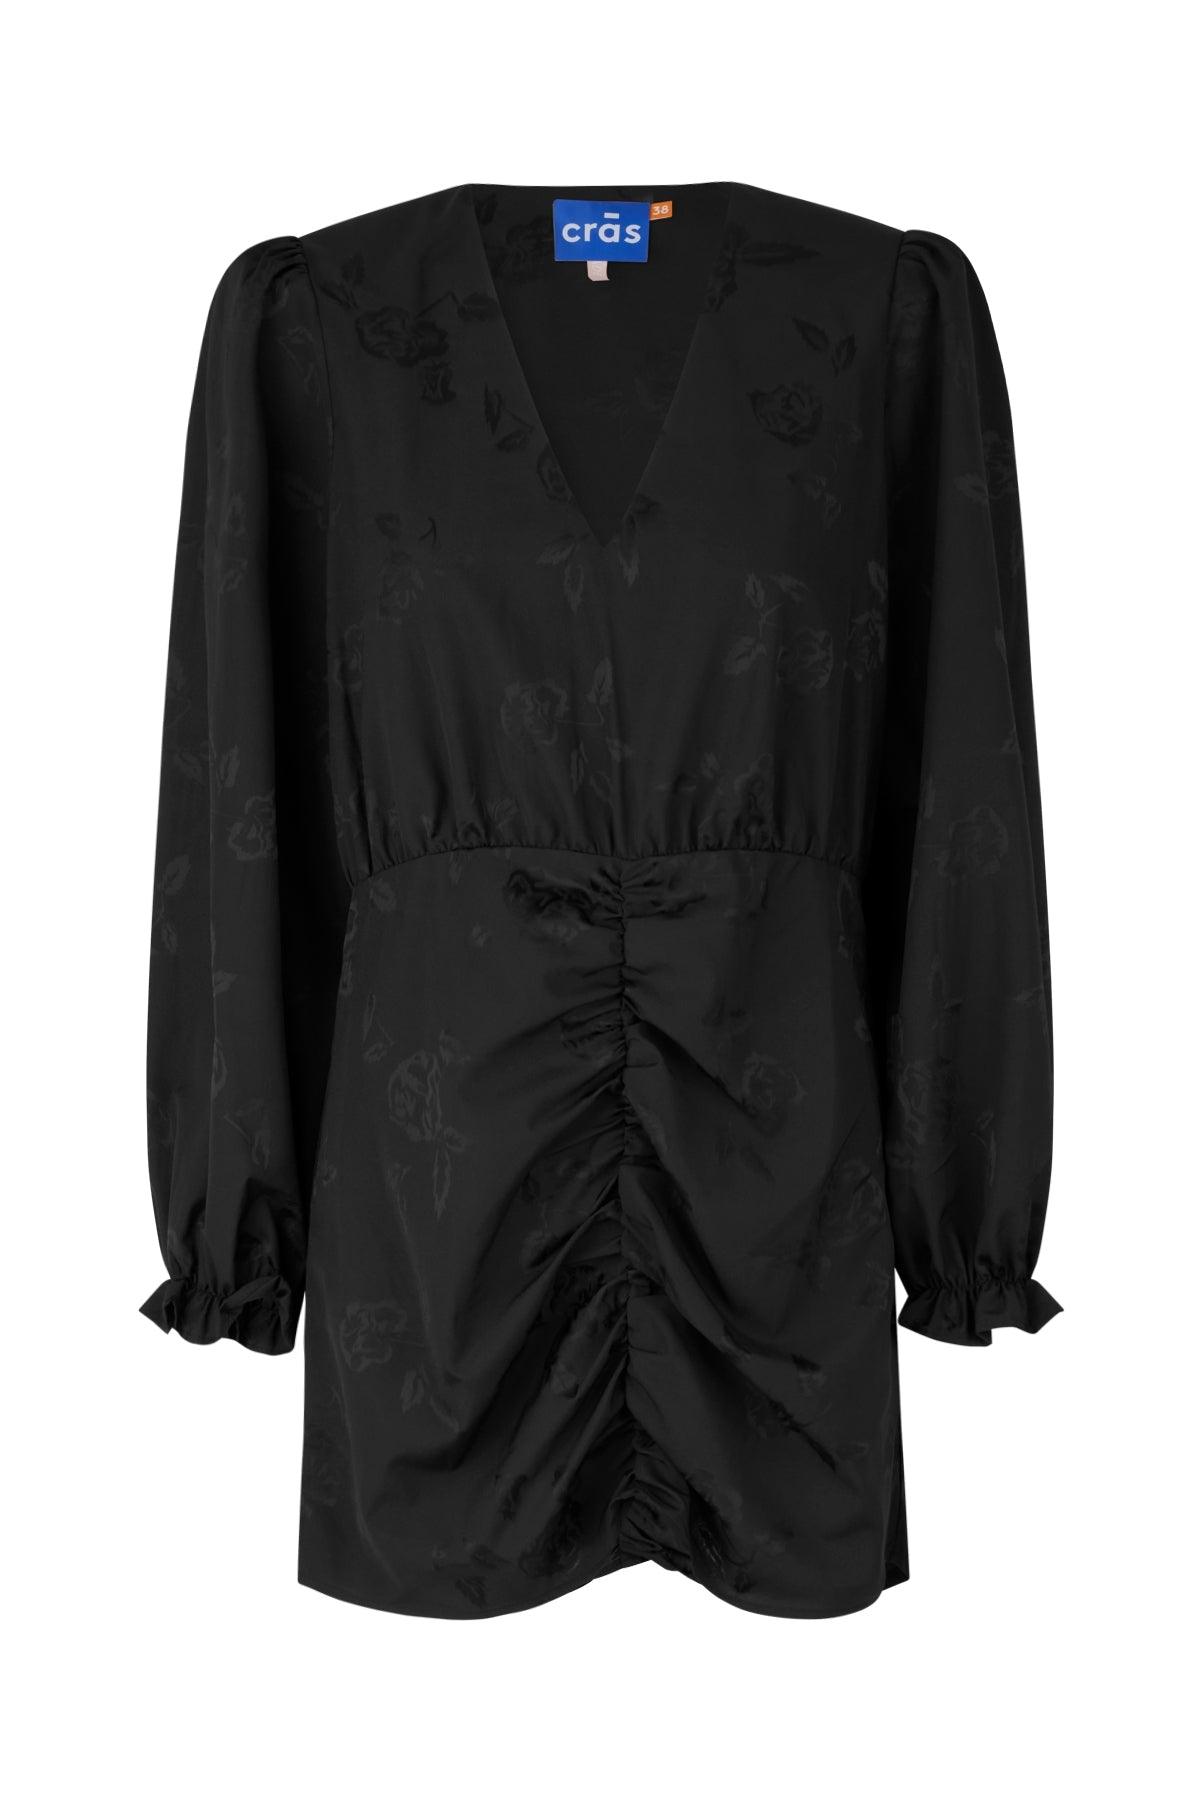 Cras - Jada Dress Black - No22 Damplassen